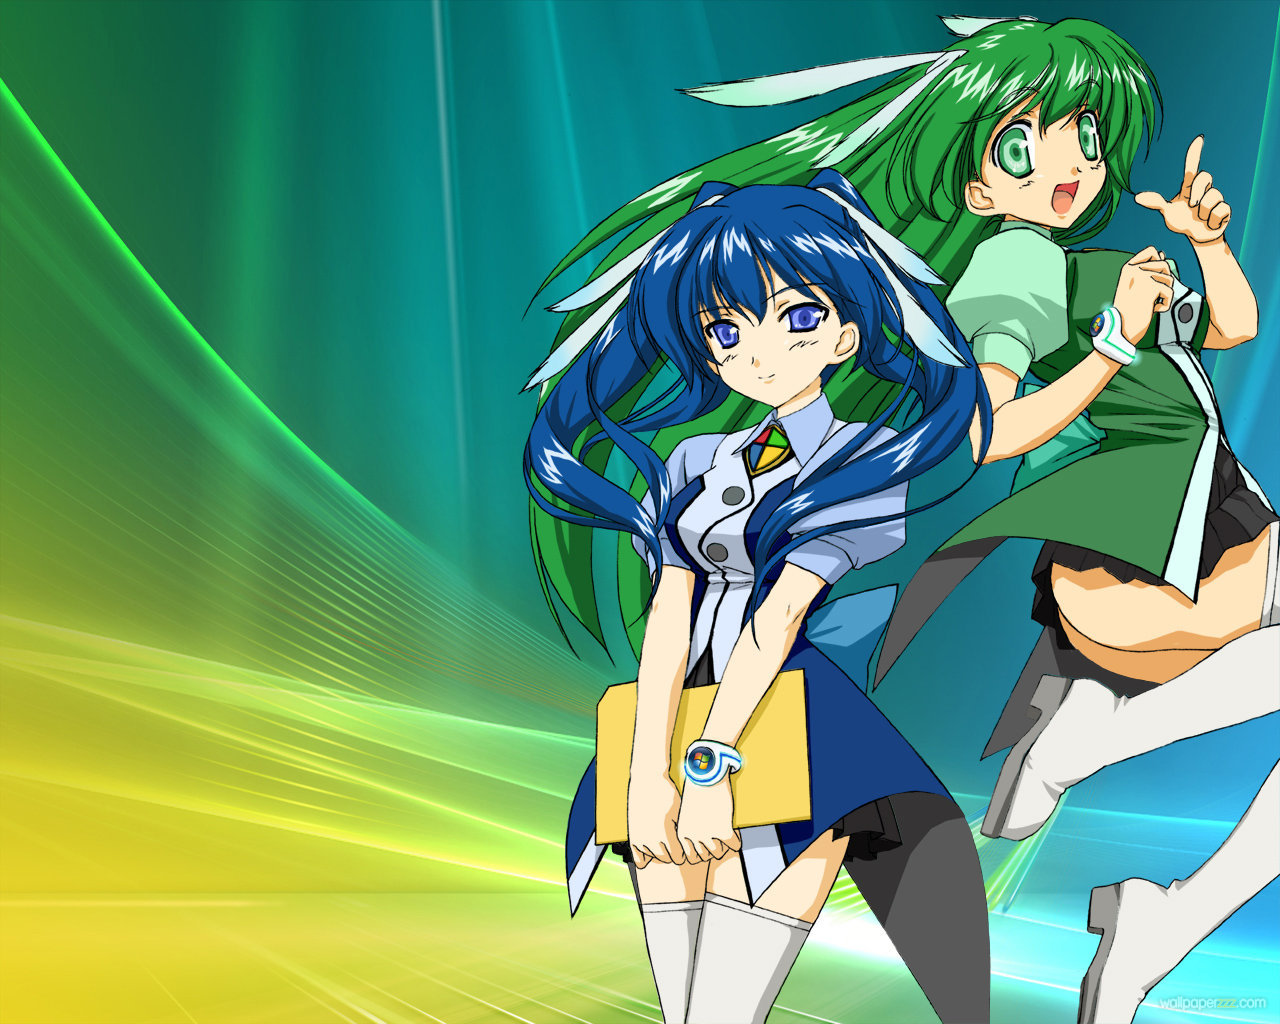 Anime-girls-26 Windows 7 theme by windowsthemes on DeviantArt